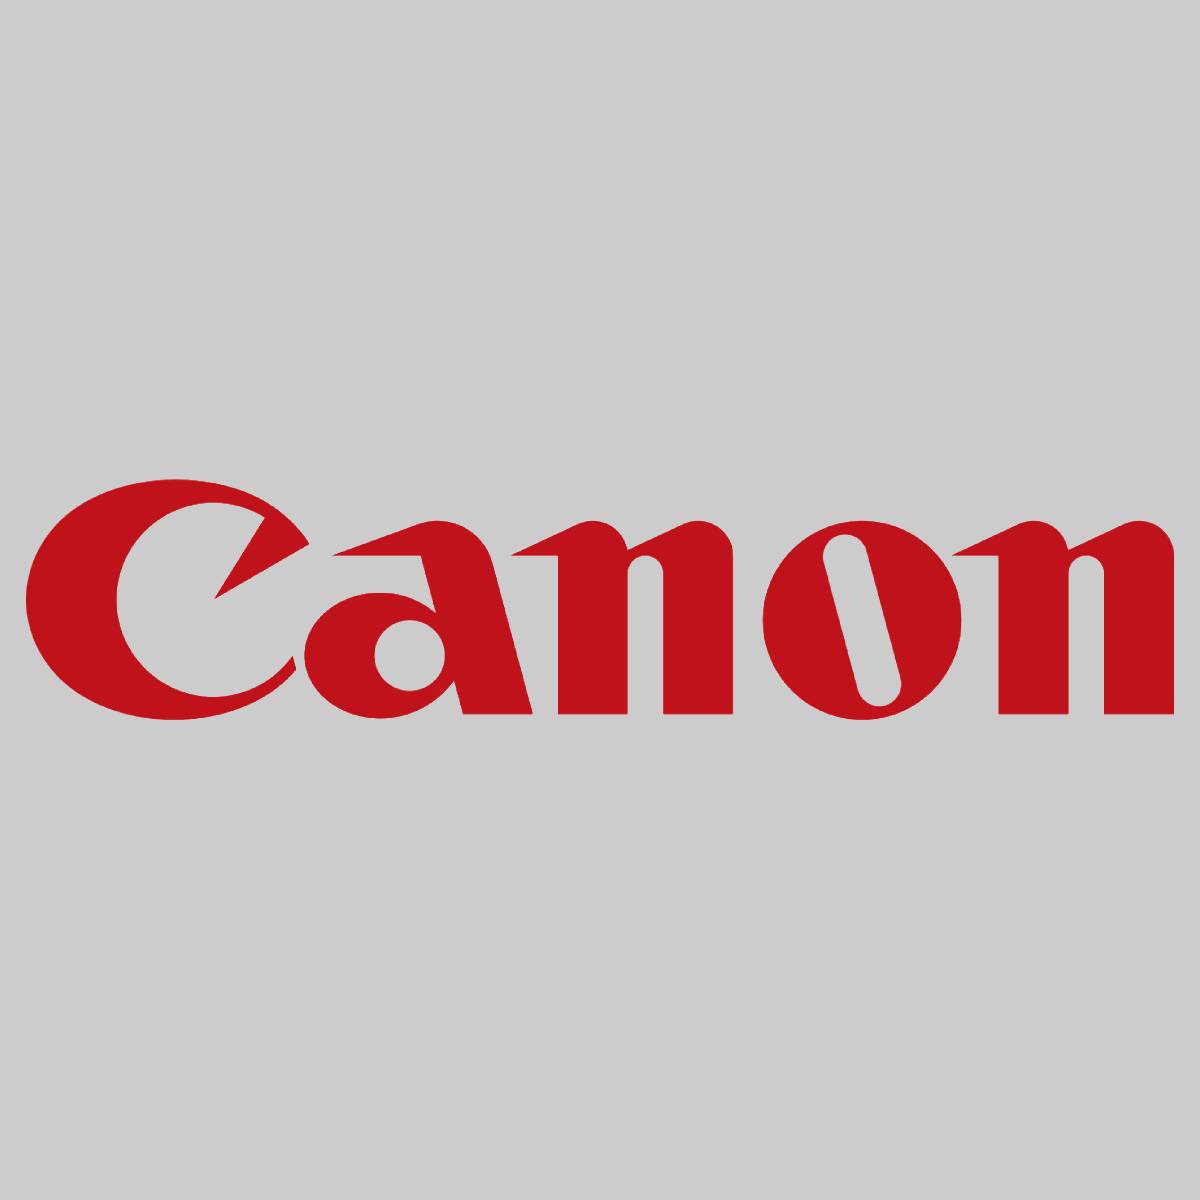 "Original Canon Toner Cyan C-EXV44 6943B002 für ImageRunner C 9200 9270 9280